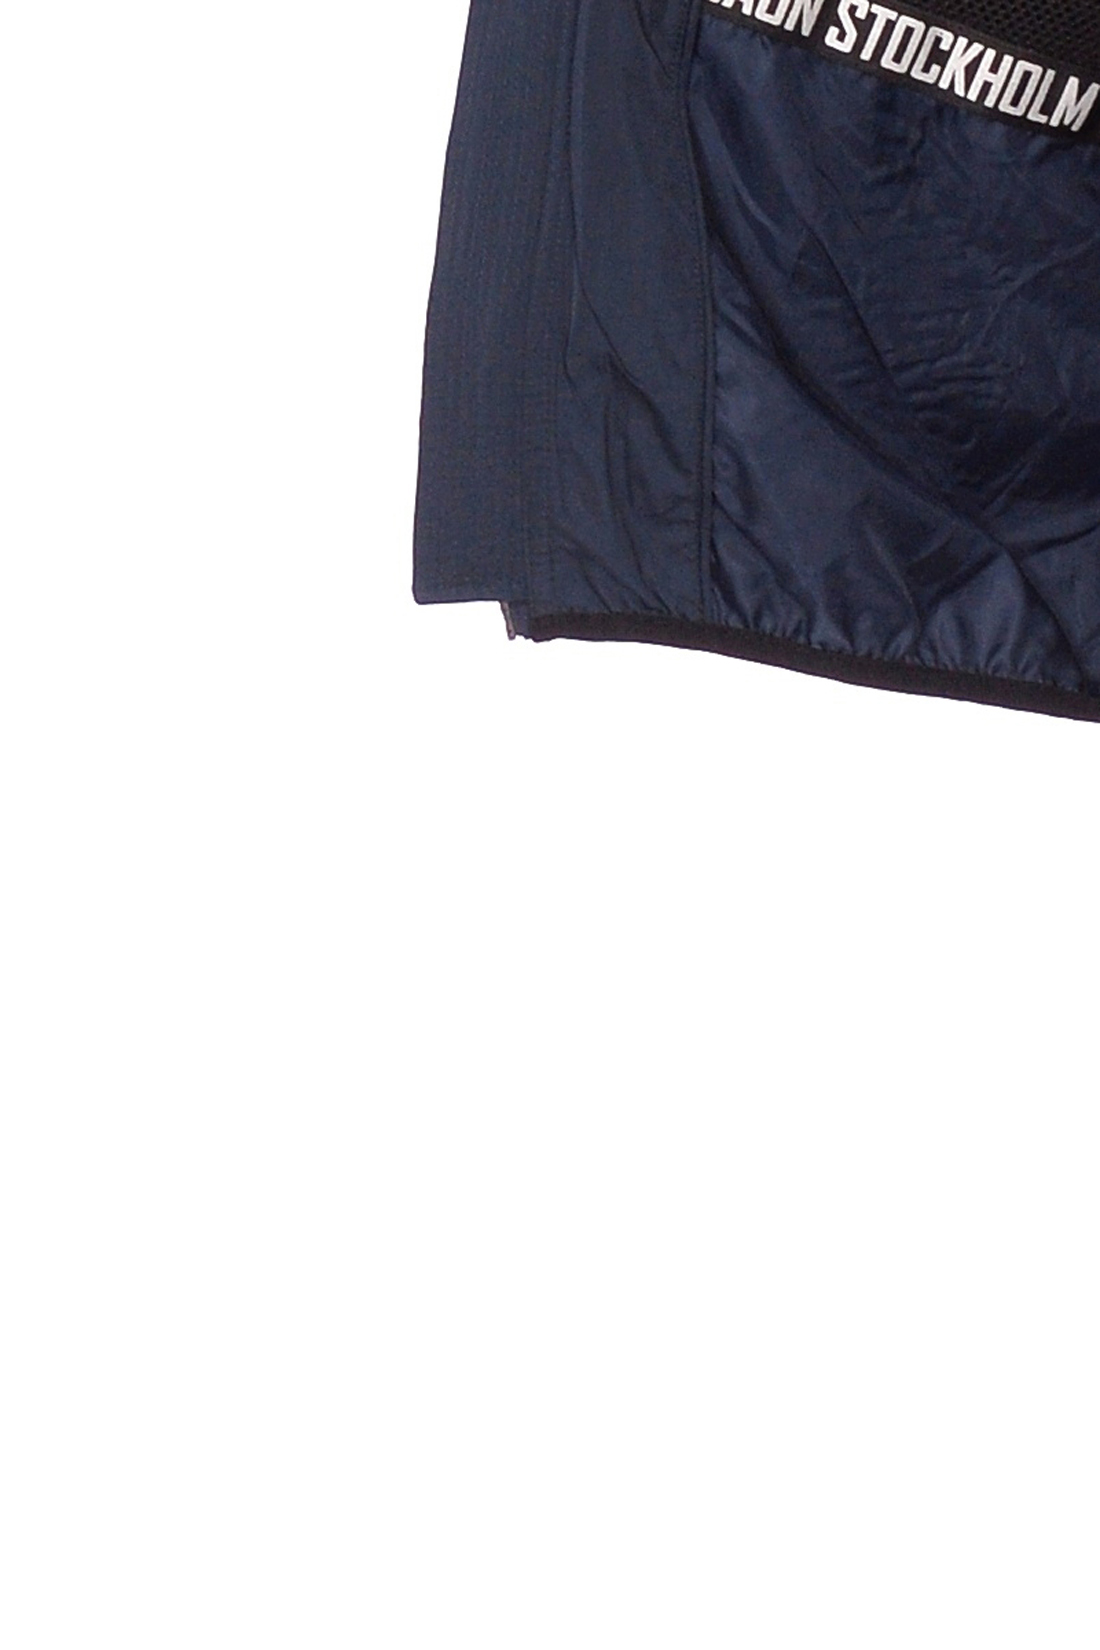 Ветровка с яркой отделкой (арт. baon B609016), размер S, цвет синий Ветровка с яркой отделкой (арт. baon B609016) - фото 4